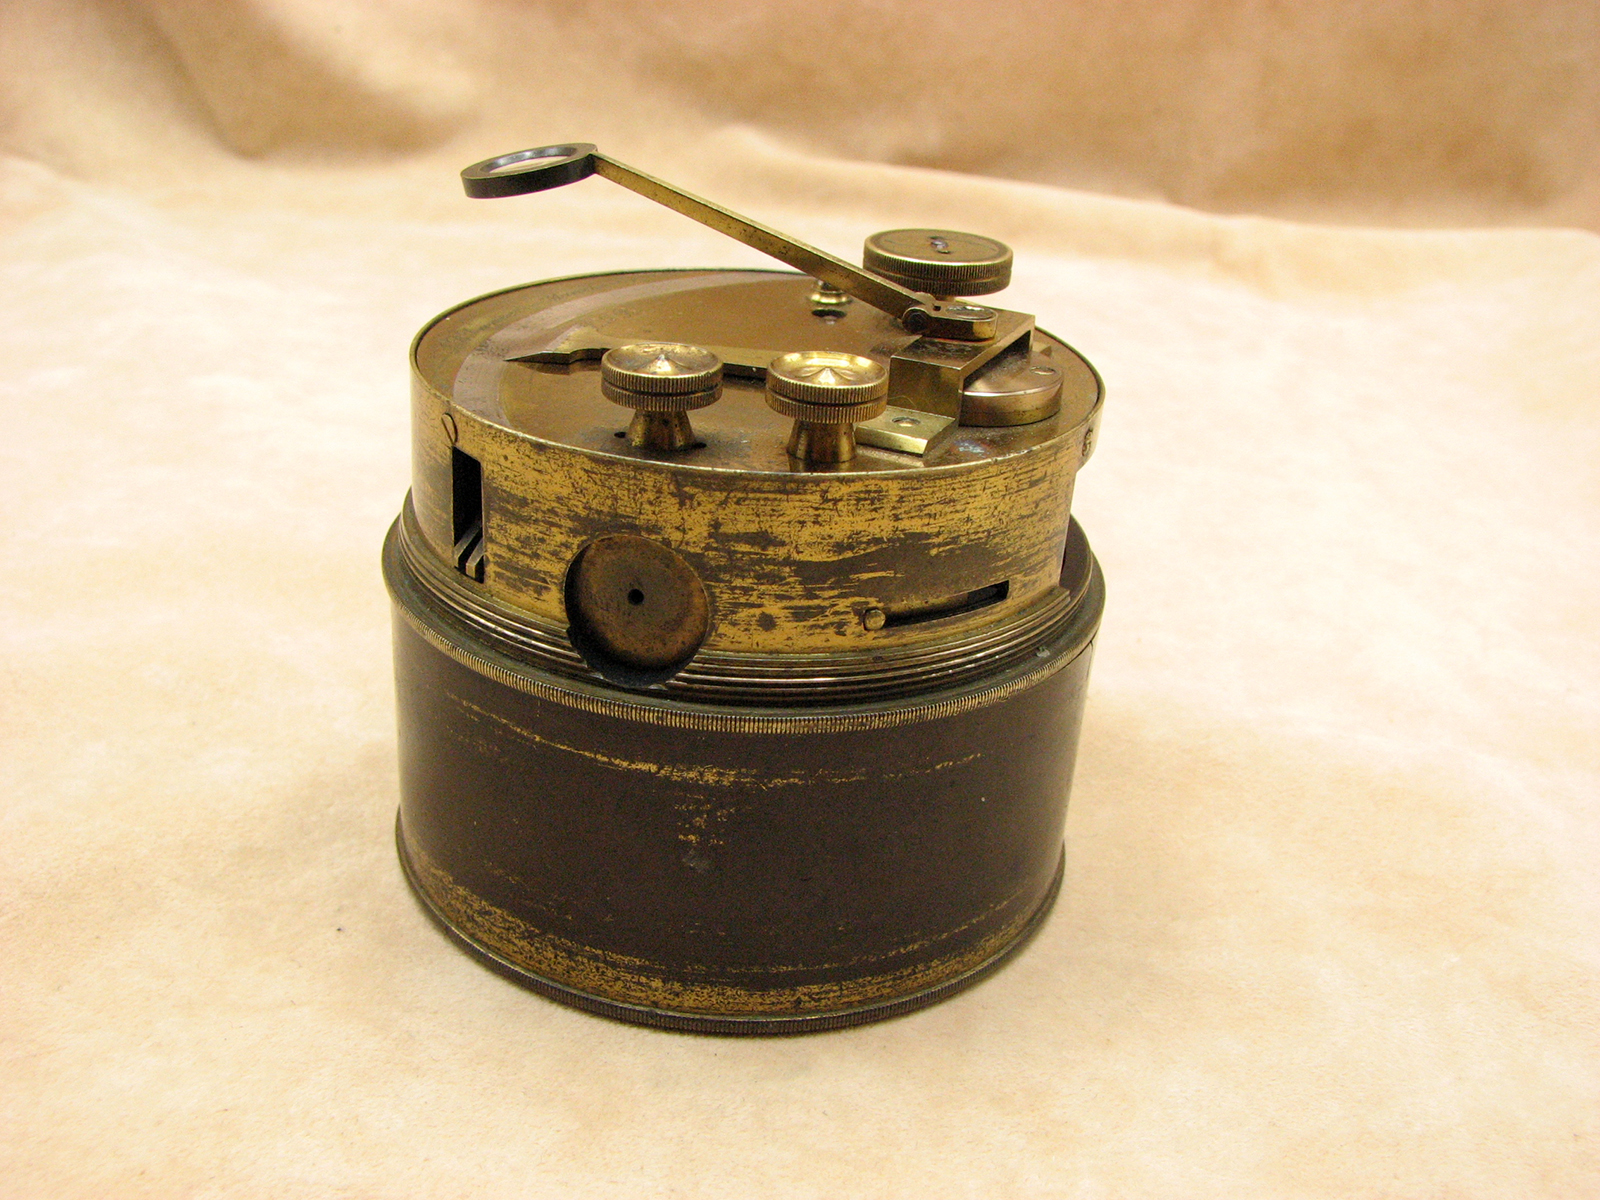 Mid 19th century pocket sextant by John Benjamin Dancer